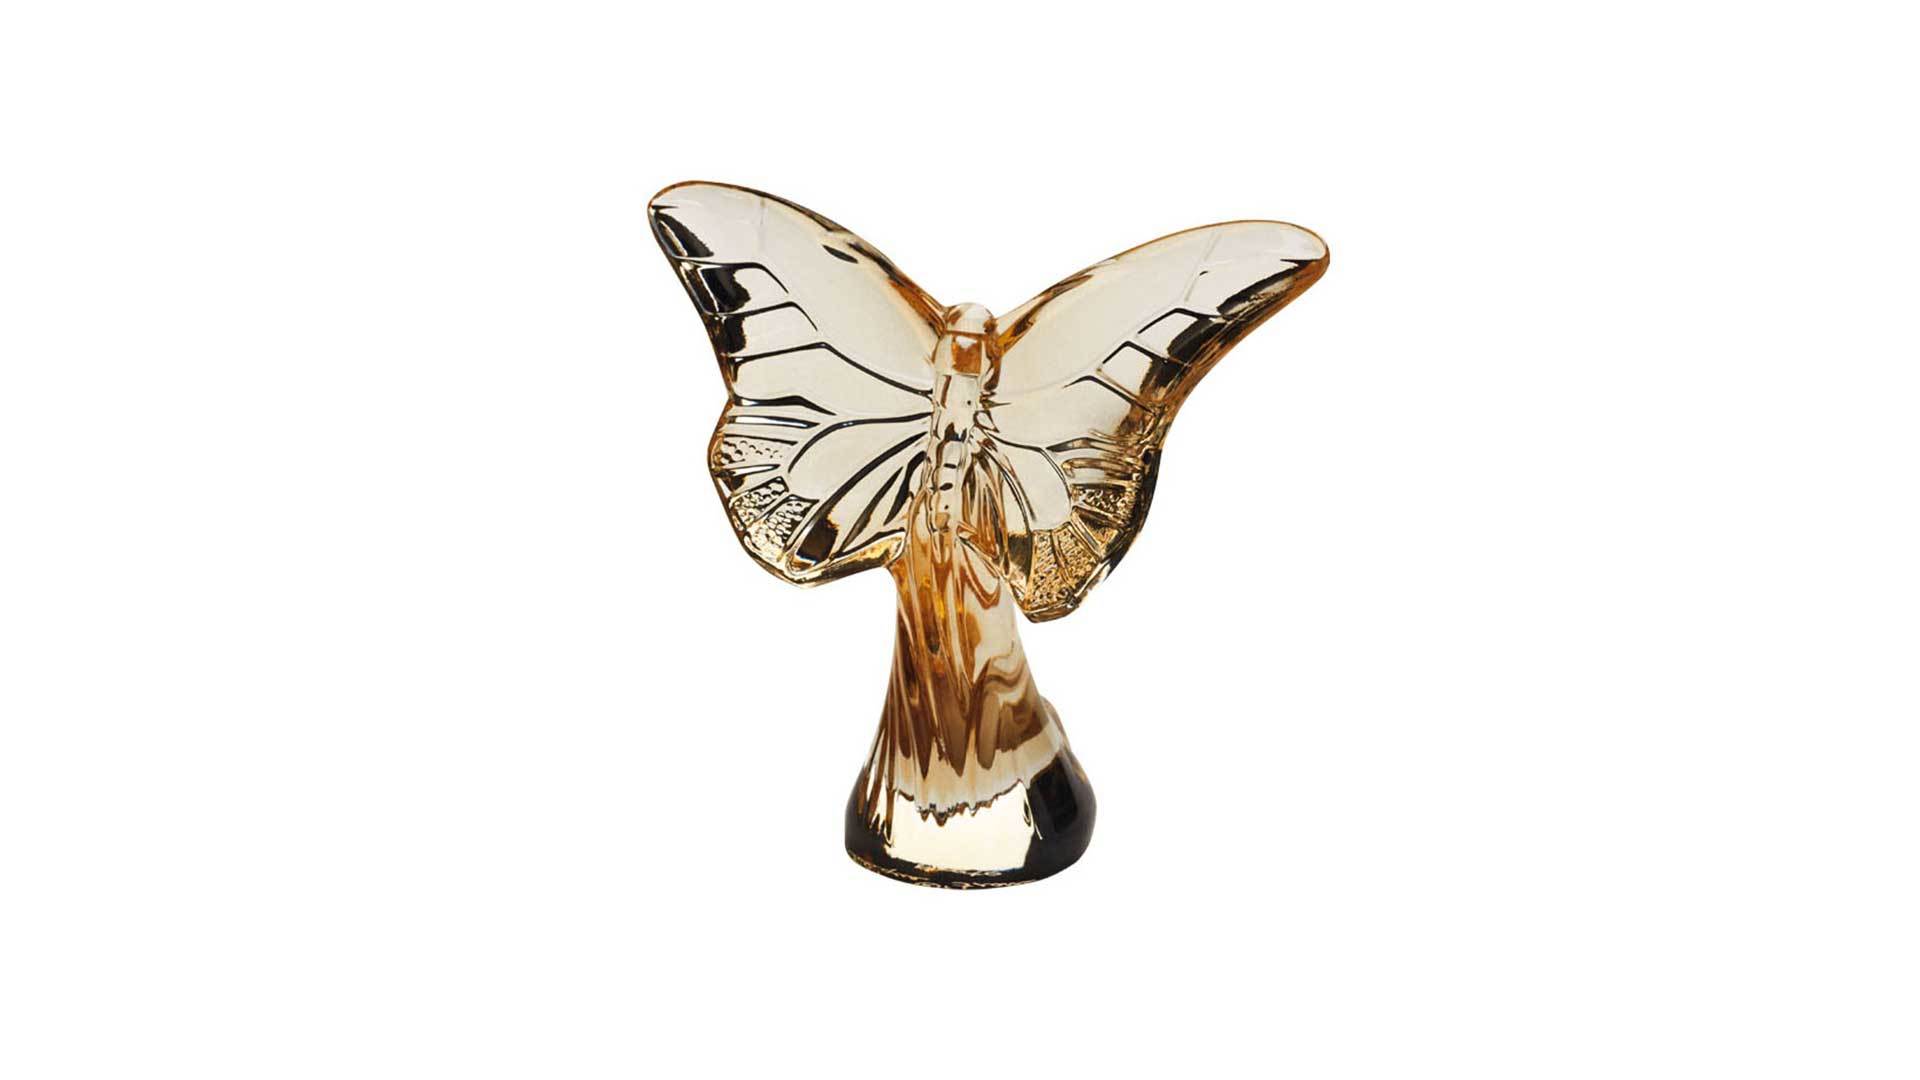 Фигурка Lalique Бабочка Rosee, хрусталь, золотой